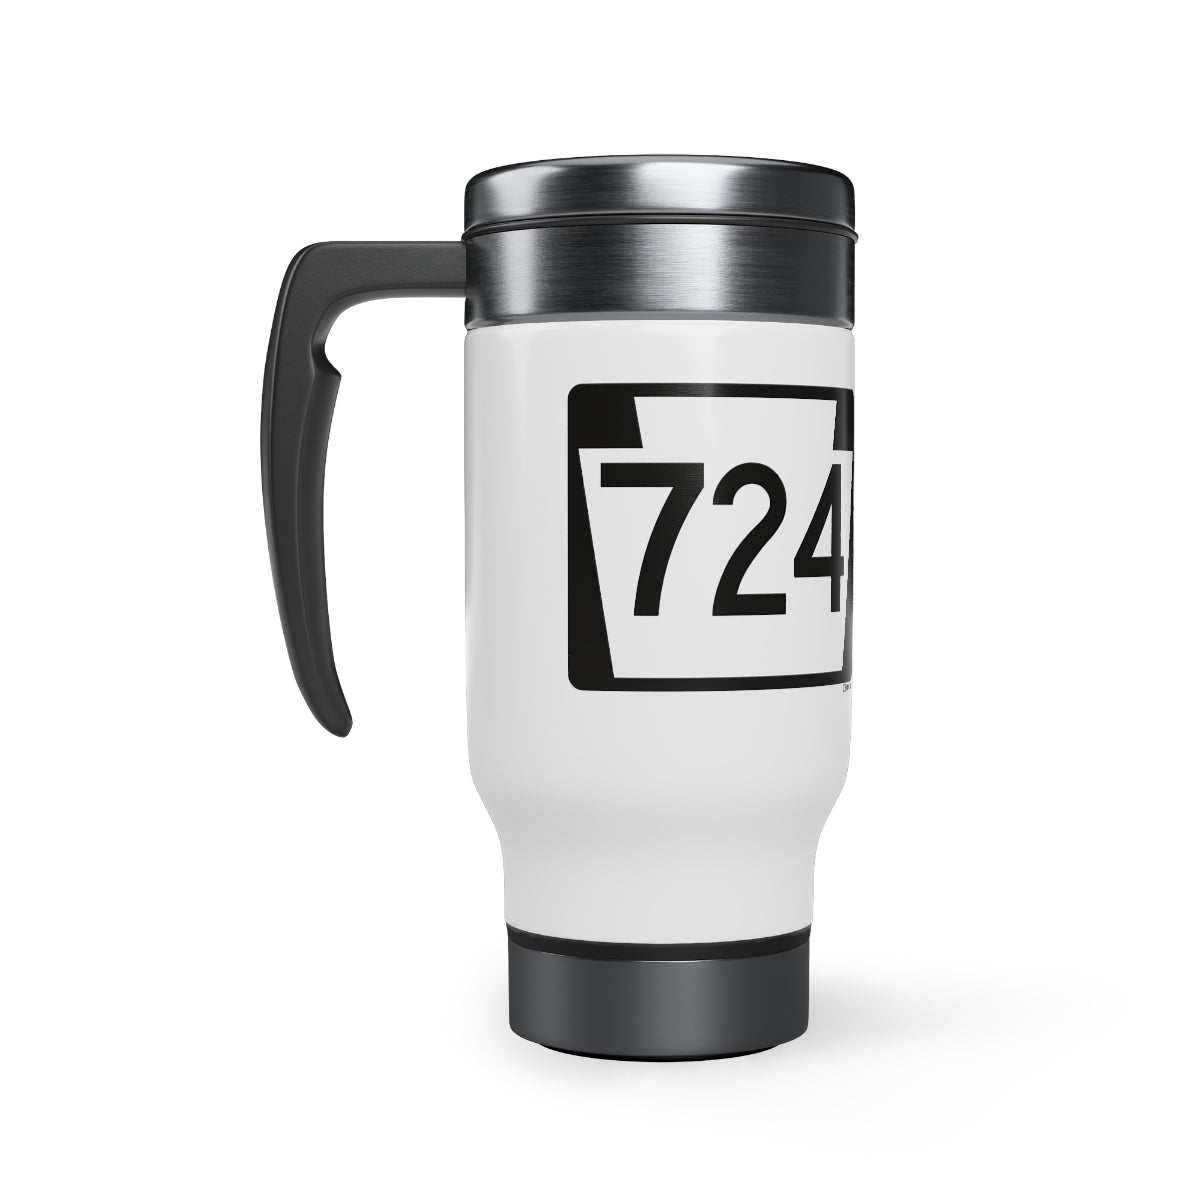 ROAD SIGN 724 - Stainless Steel Travel Mug with Handle, 14oz - Yinzylvania